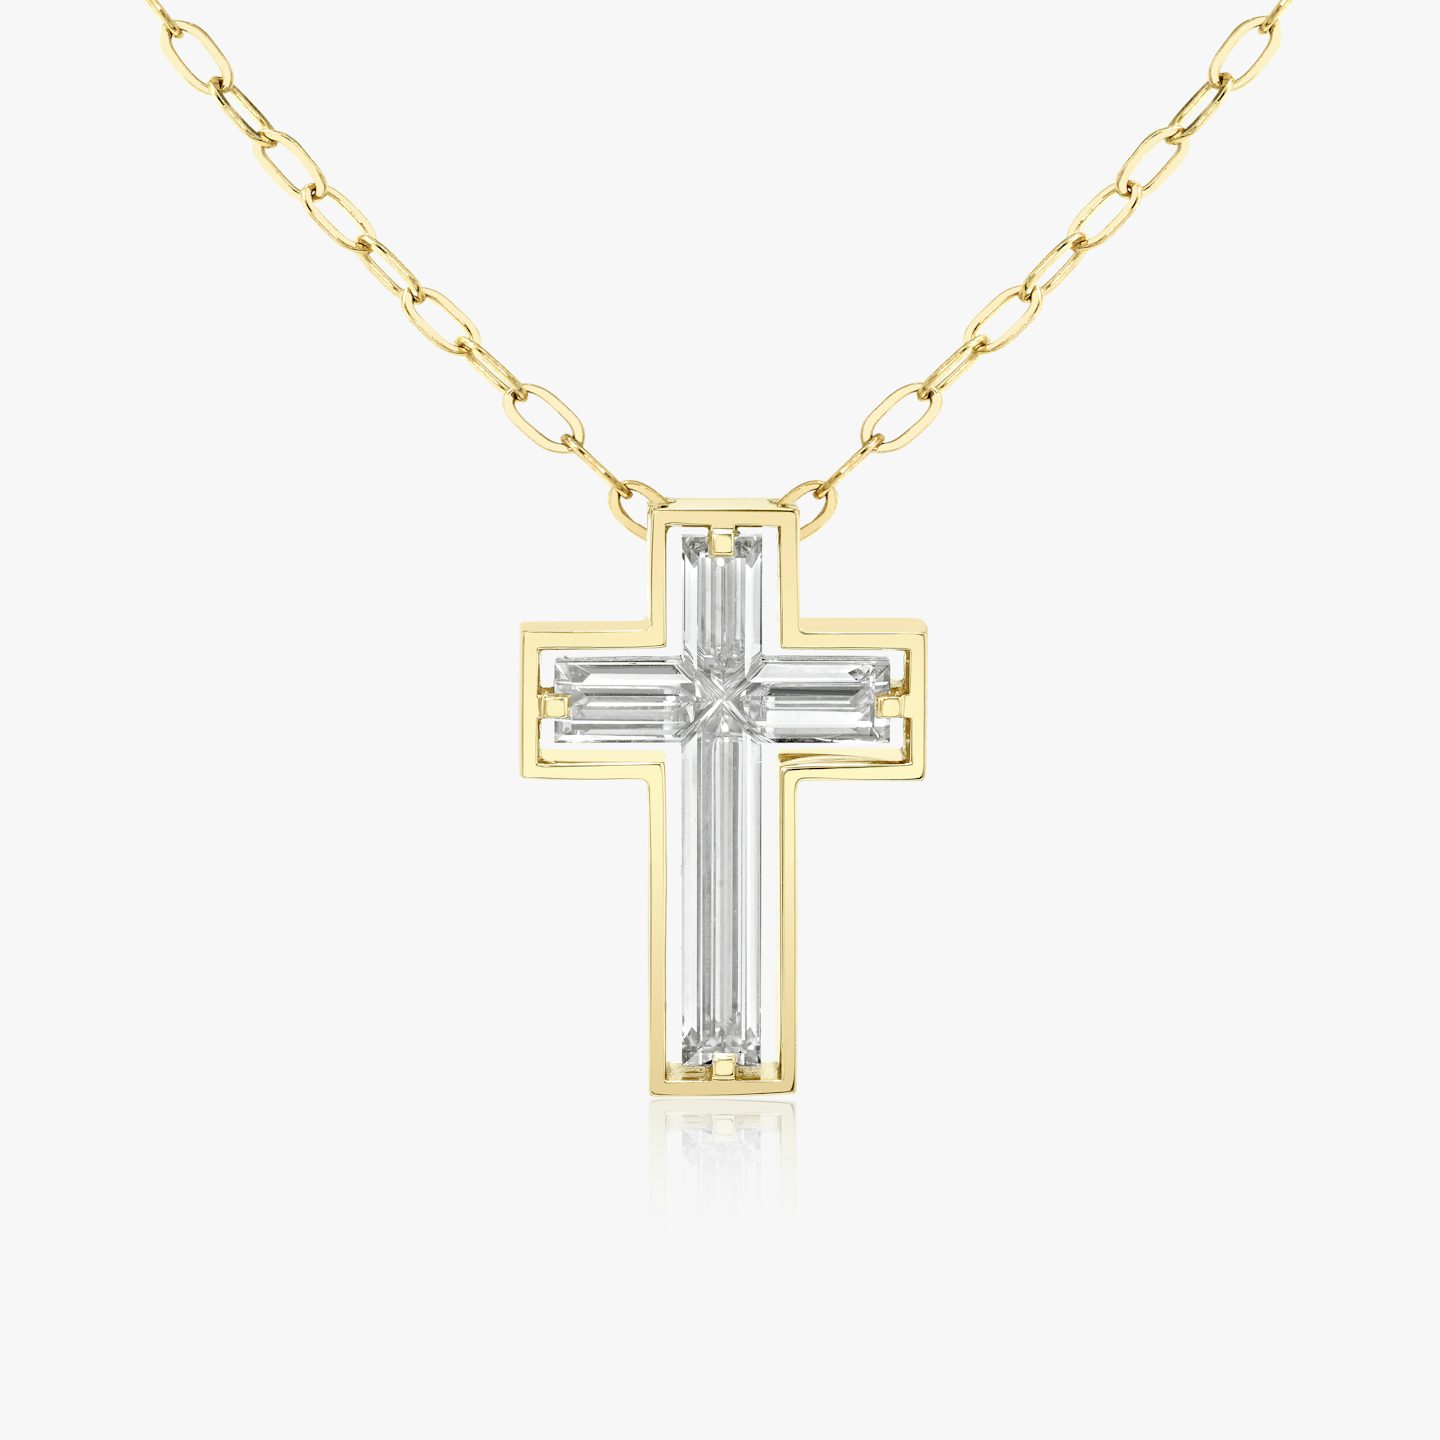 Suspended Solitaire Cross Halskette | 18k | 18k Gelbgold | Kettenlänge: 18-20